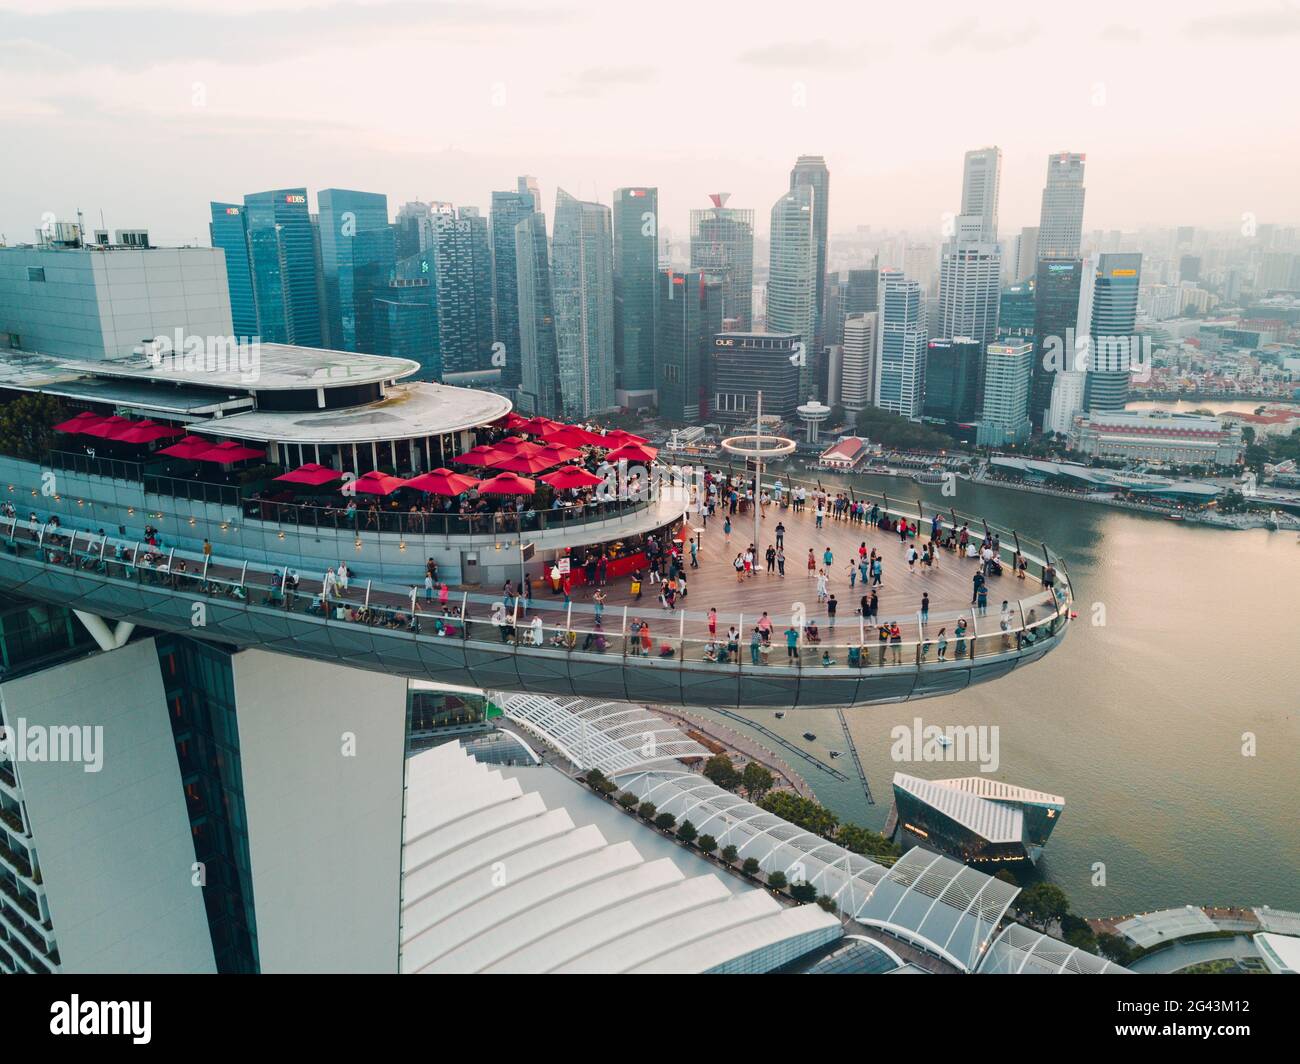 26 febbraio 2018: Singapore, Marina Bay Sands Hotel di lusso. Vista Quadrupter. Foto Stock